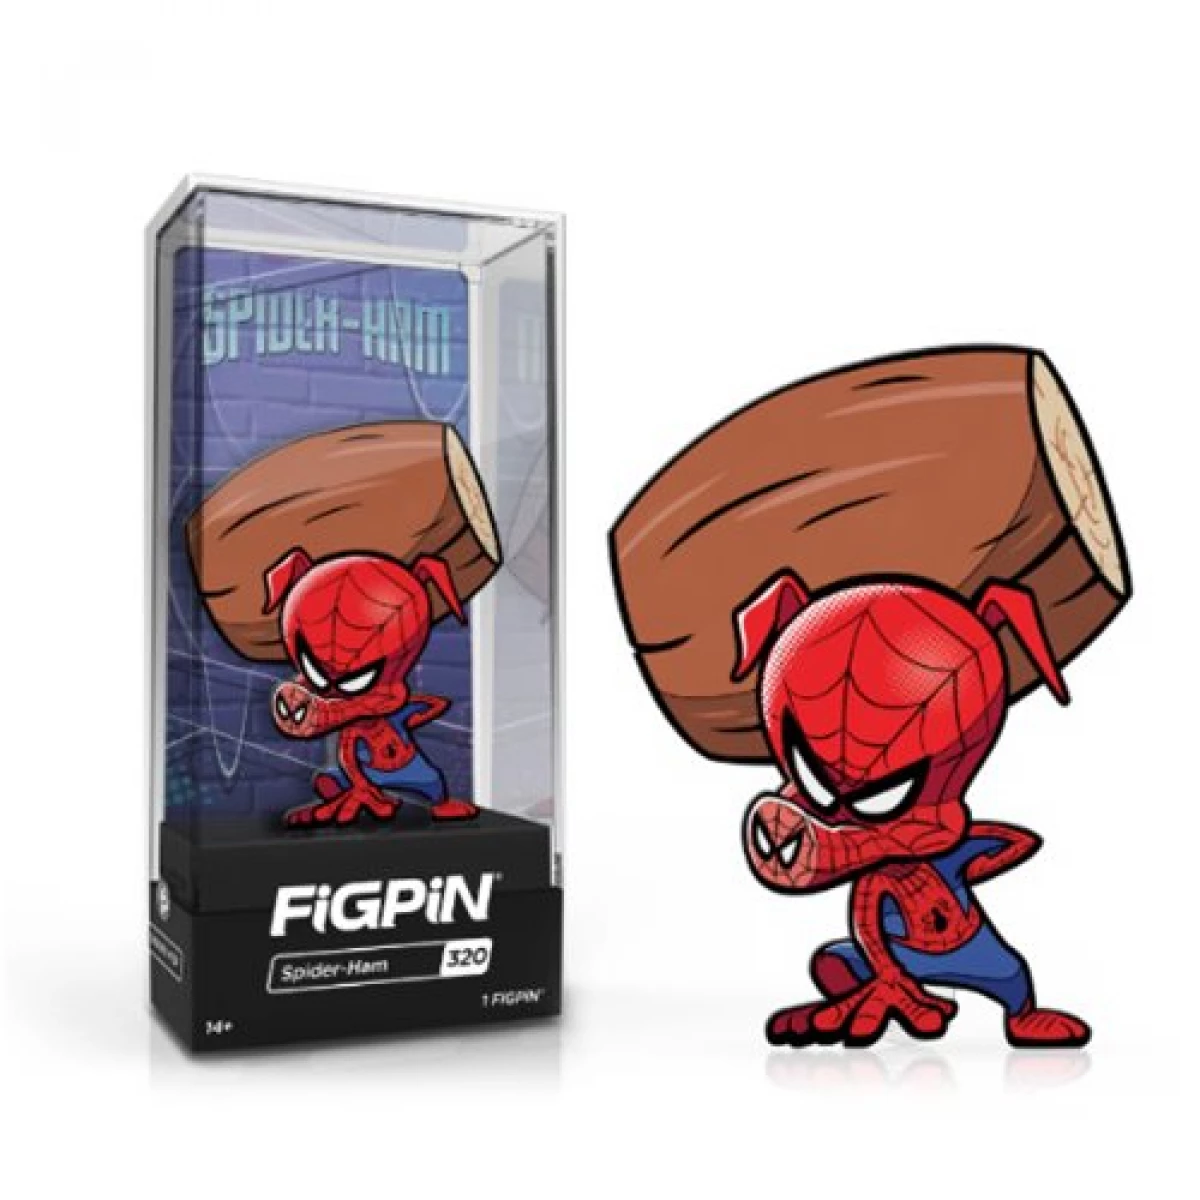 SpiderMan: SpiderVerse SpiderHam FiGPiN Enamel Pin